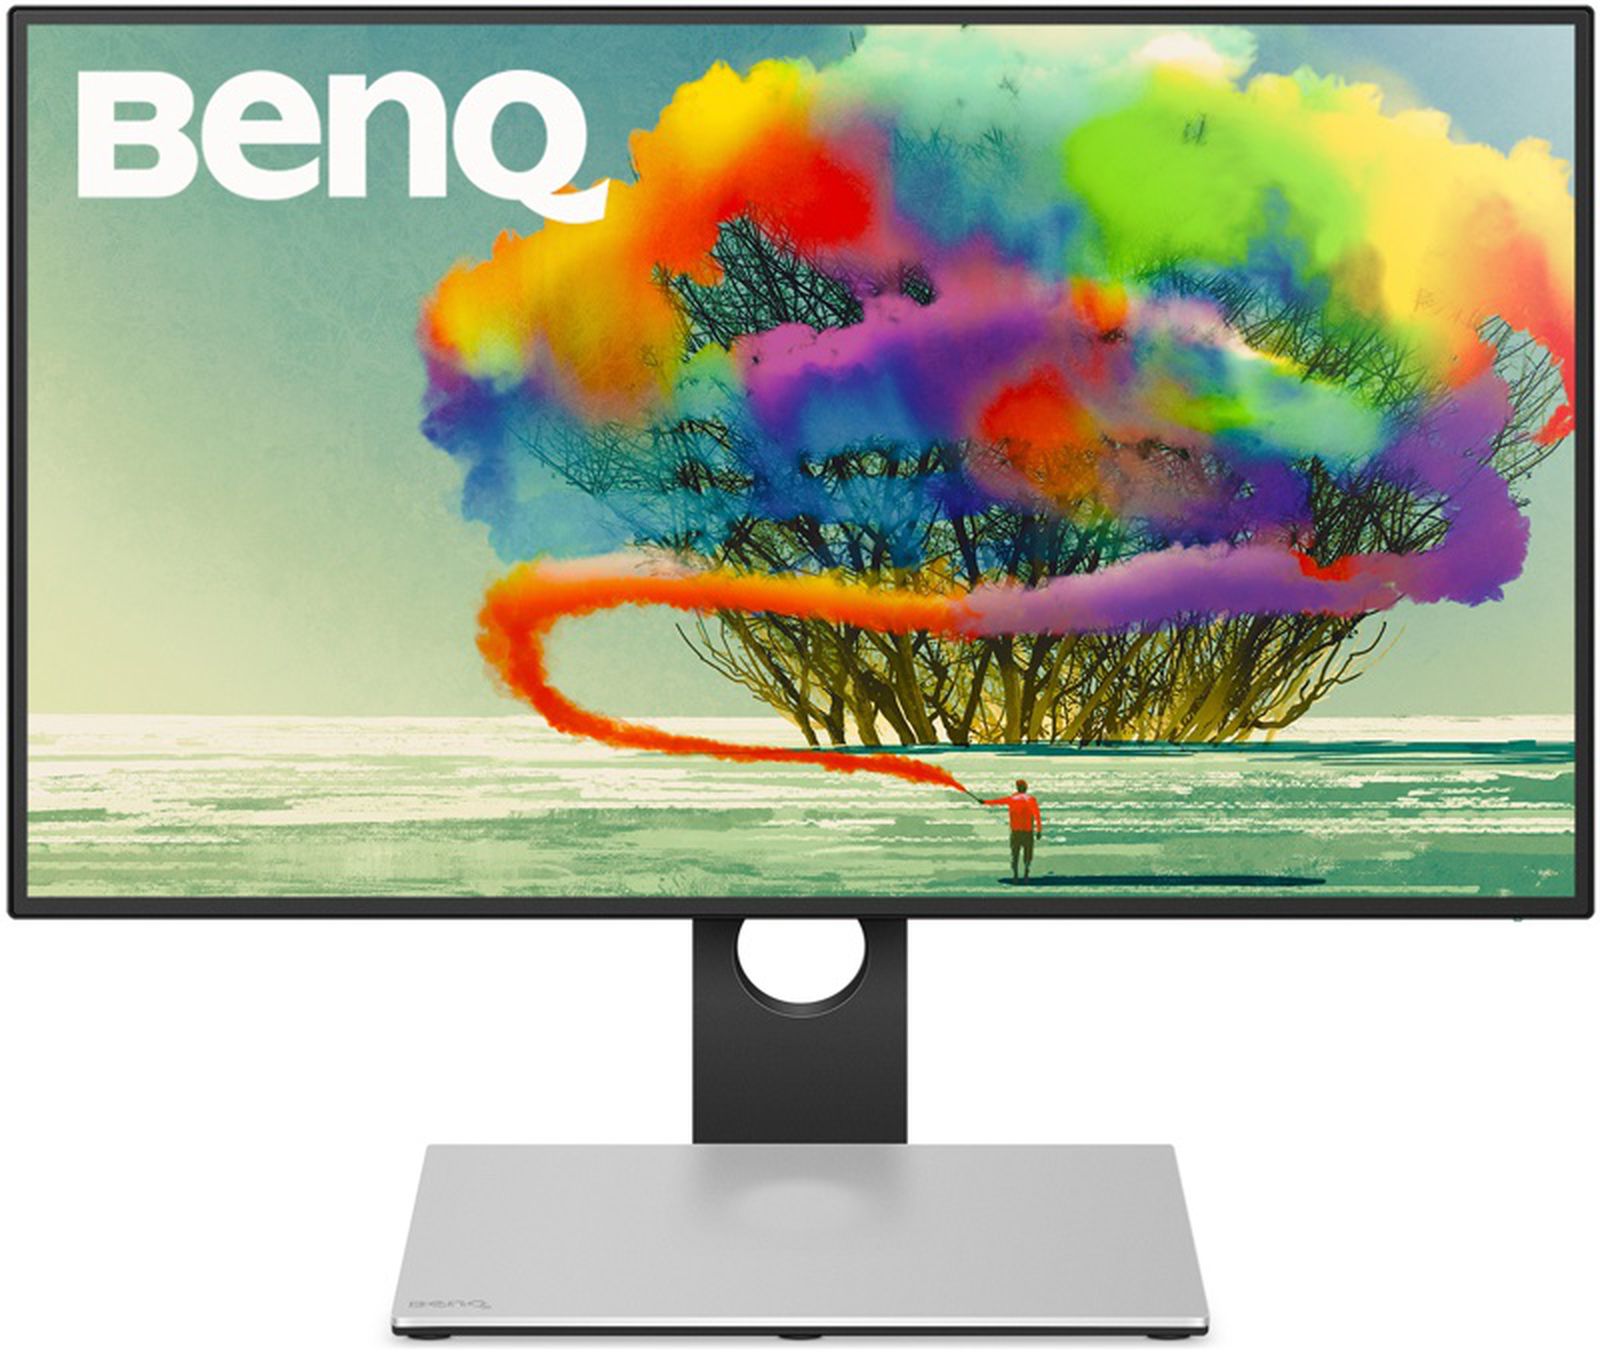 BenQ Designer Monitors for Creative Design